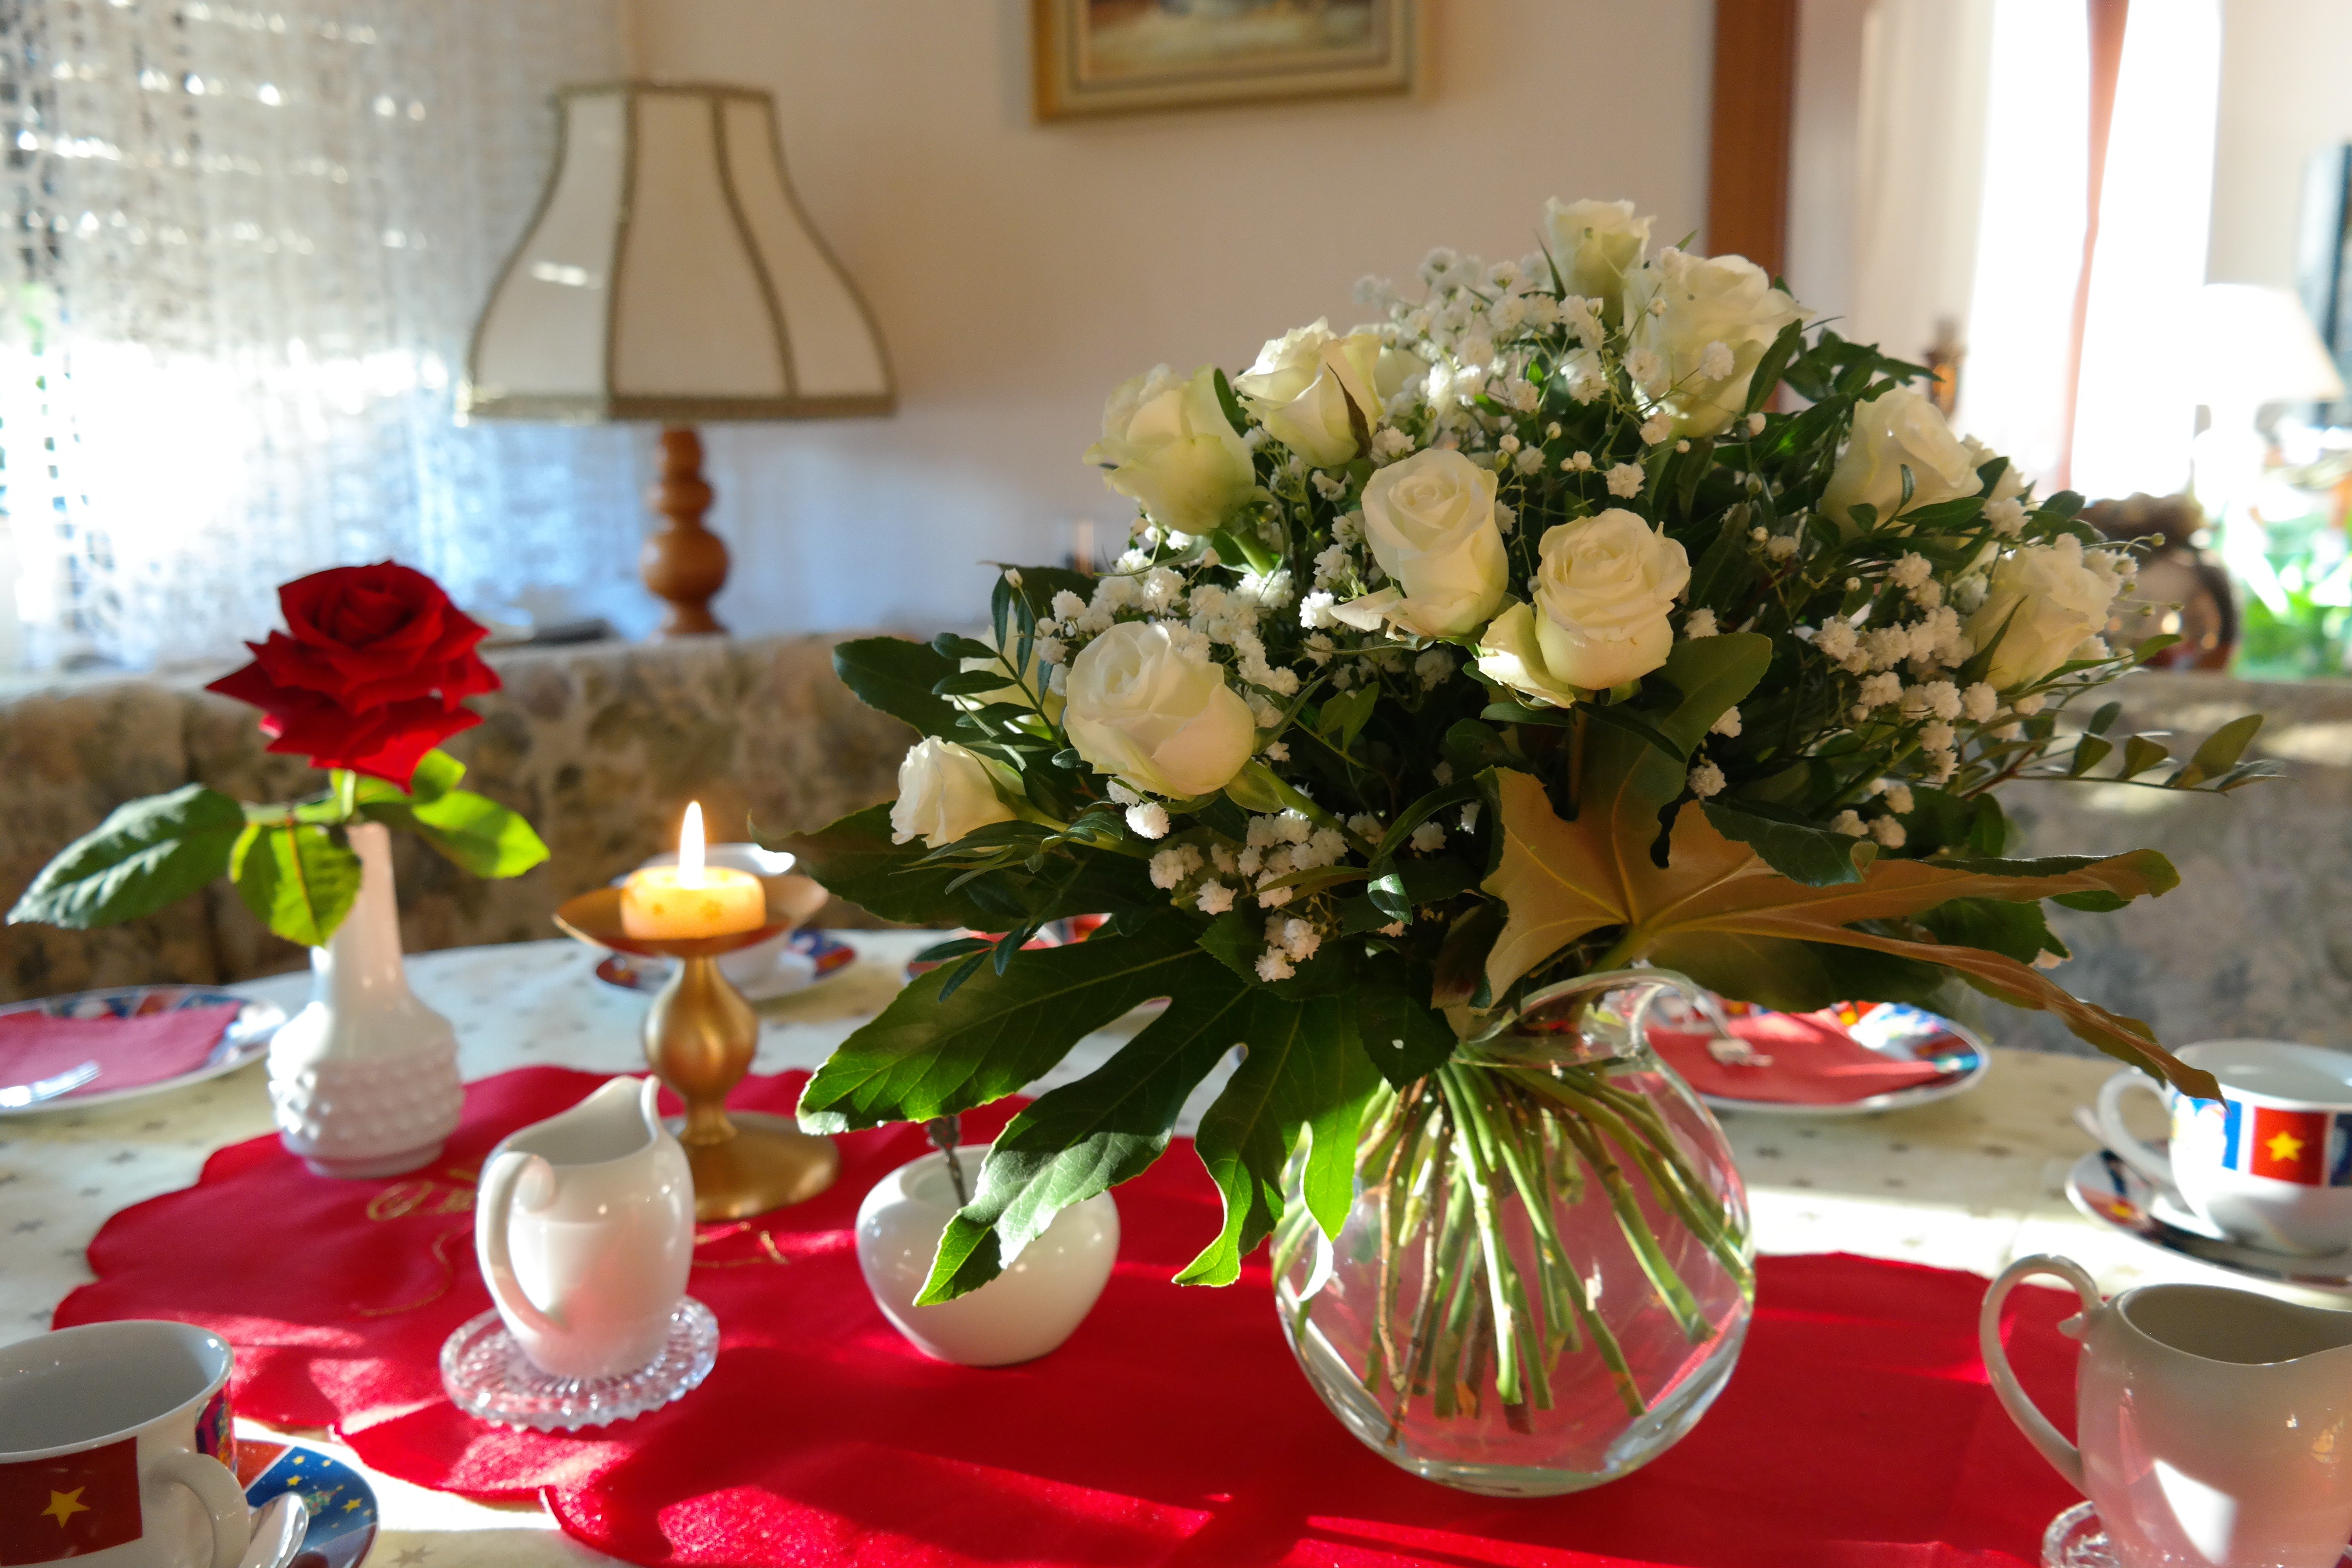 Букеты роз в вазе на столе. Цветочные композиции на стол. Композиция из цветов на стол. Букет цветов на столе. Ваза с цветами на столе.